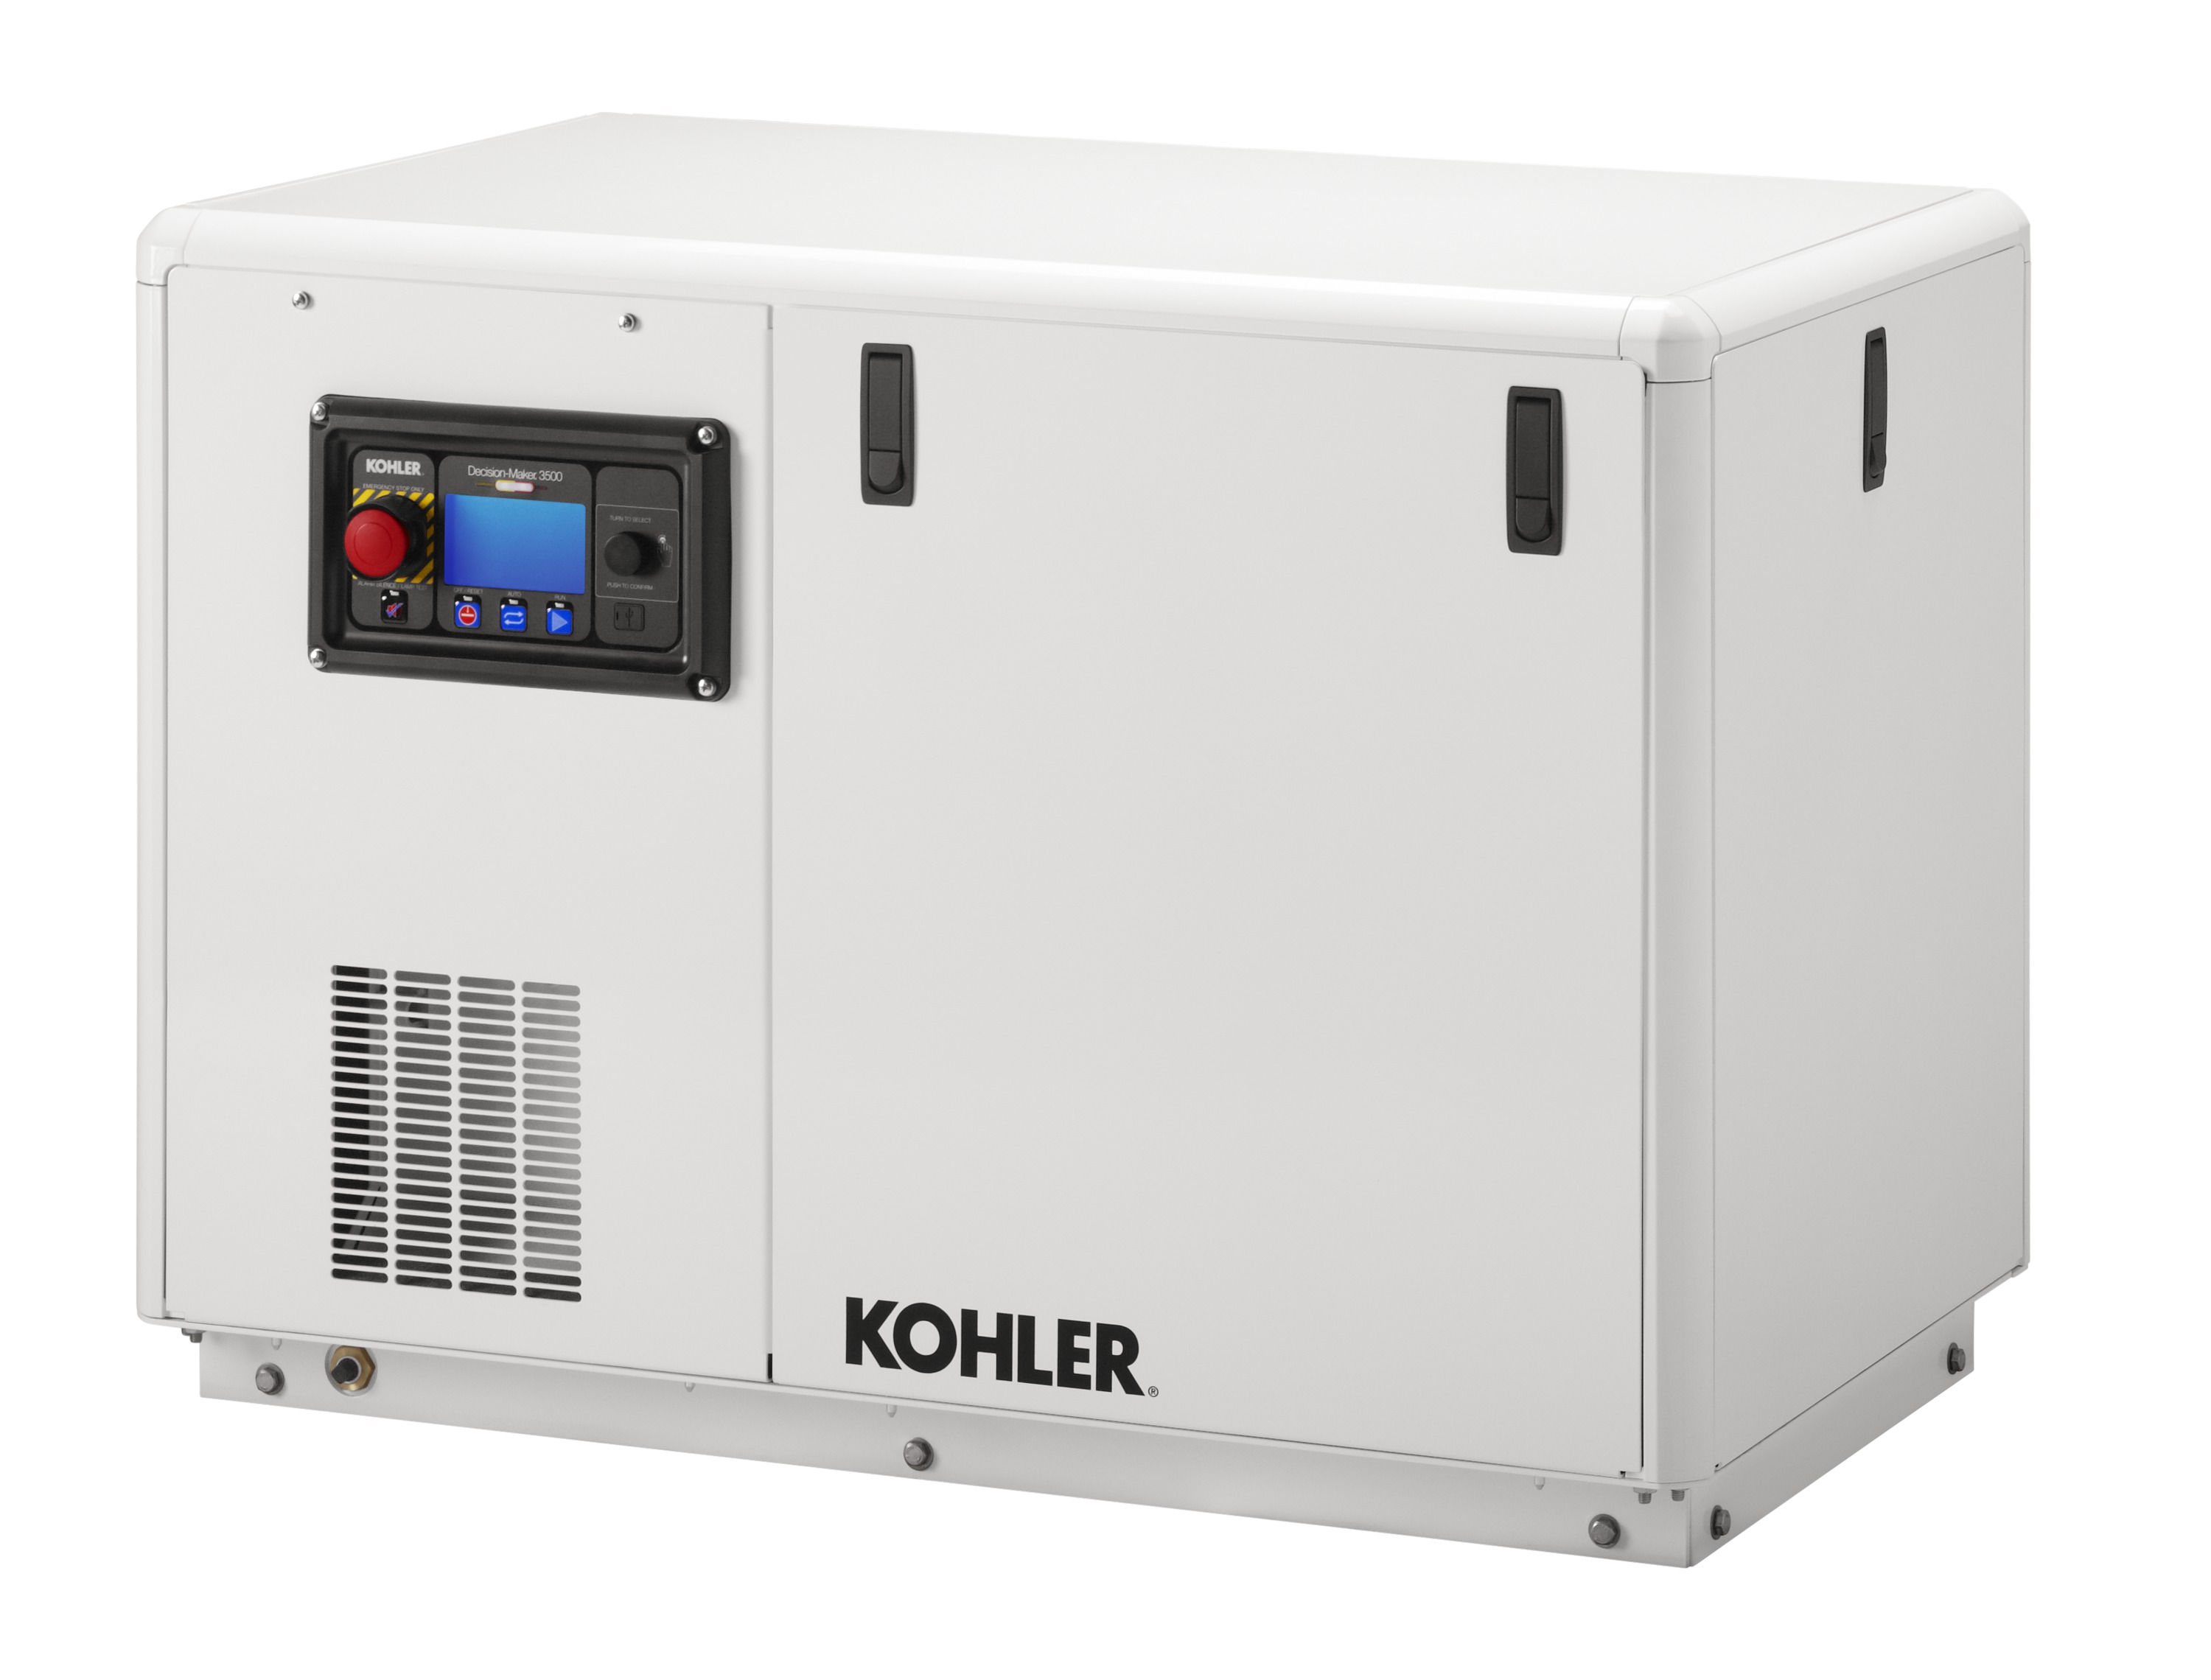 Kohler Launches New Tier 3 Diesel Marine Generators